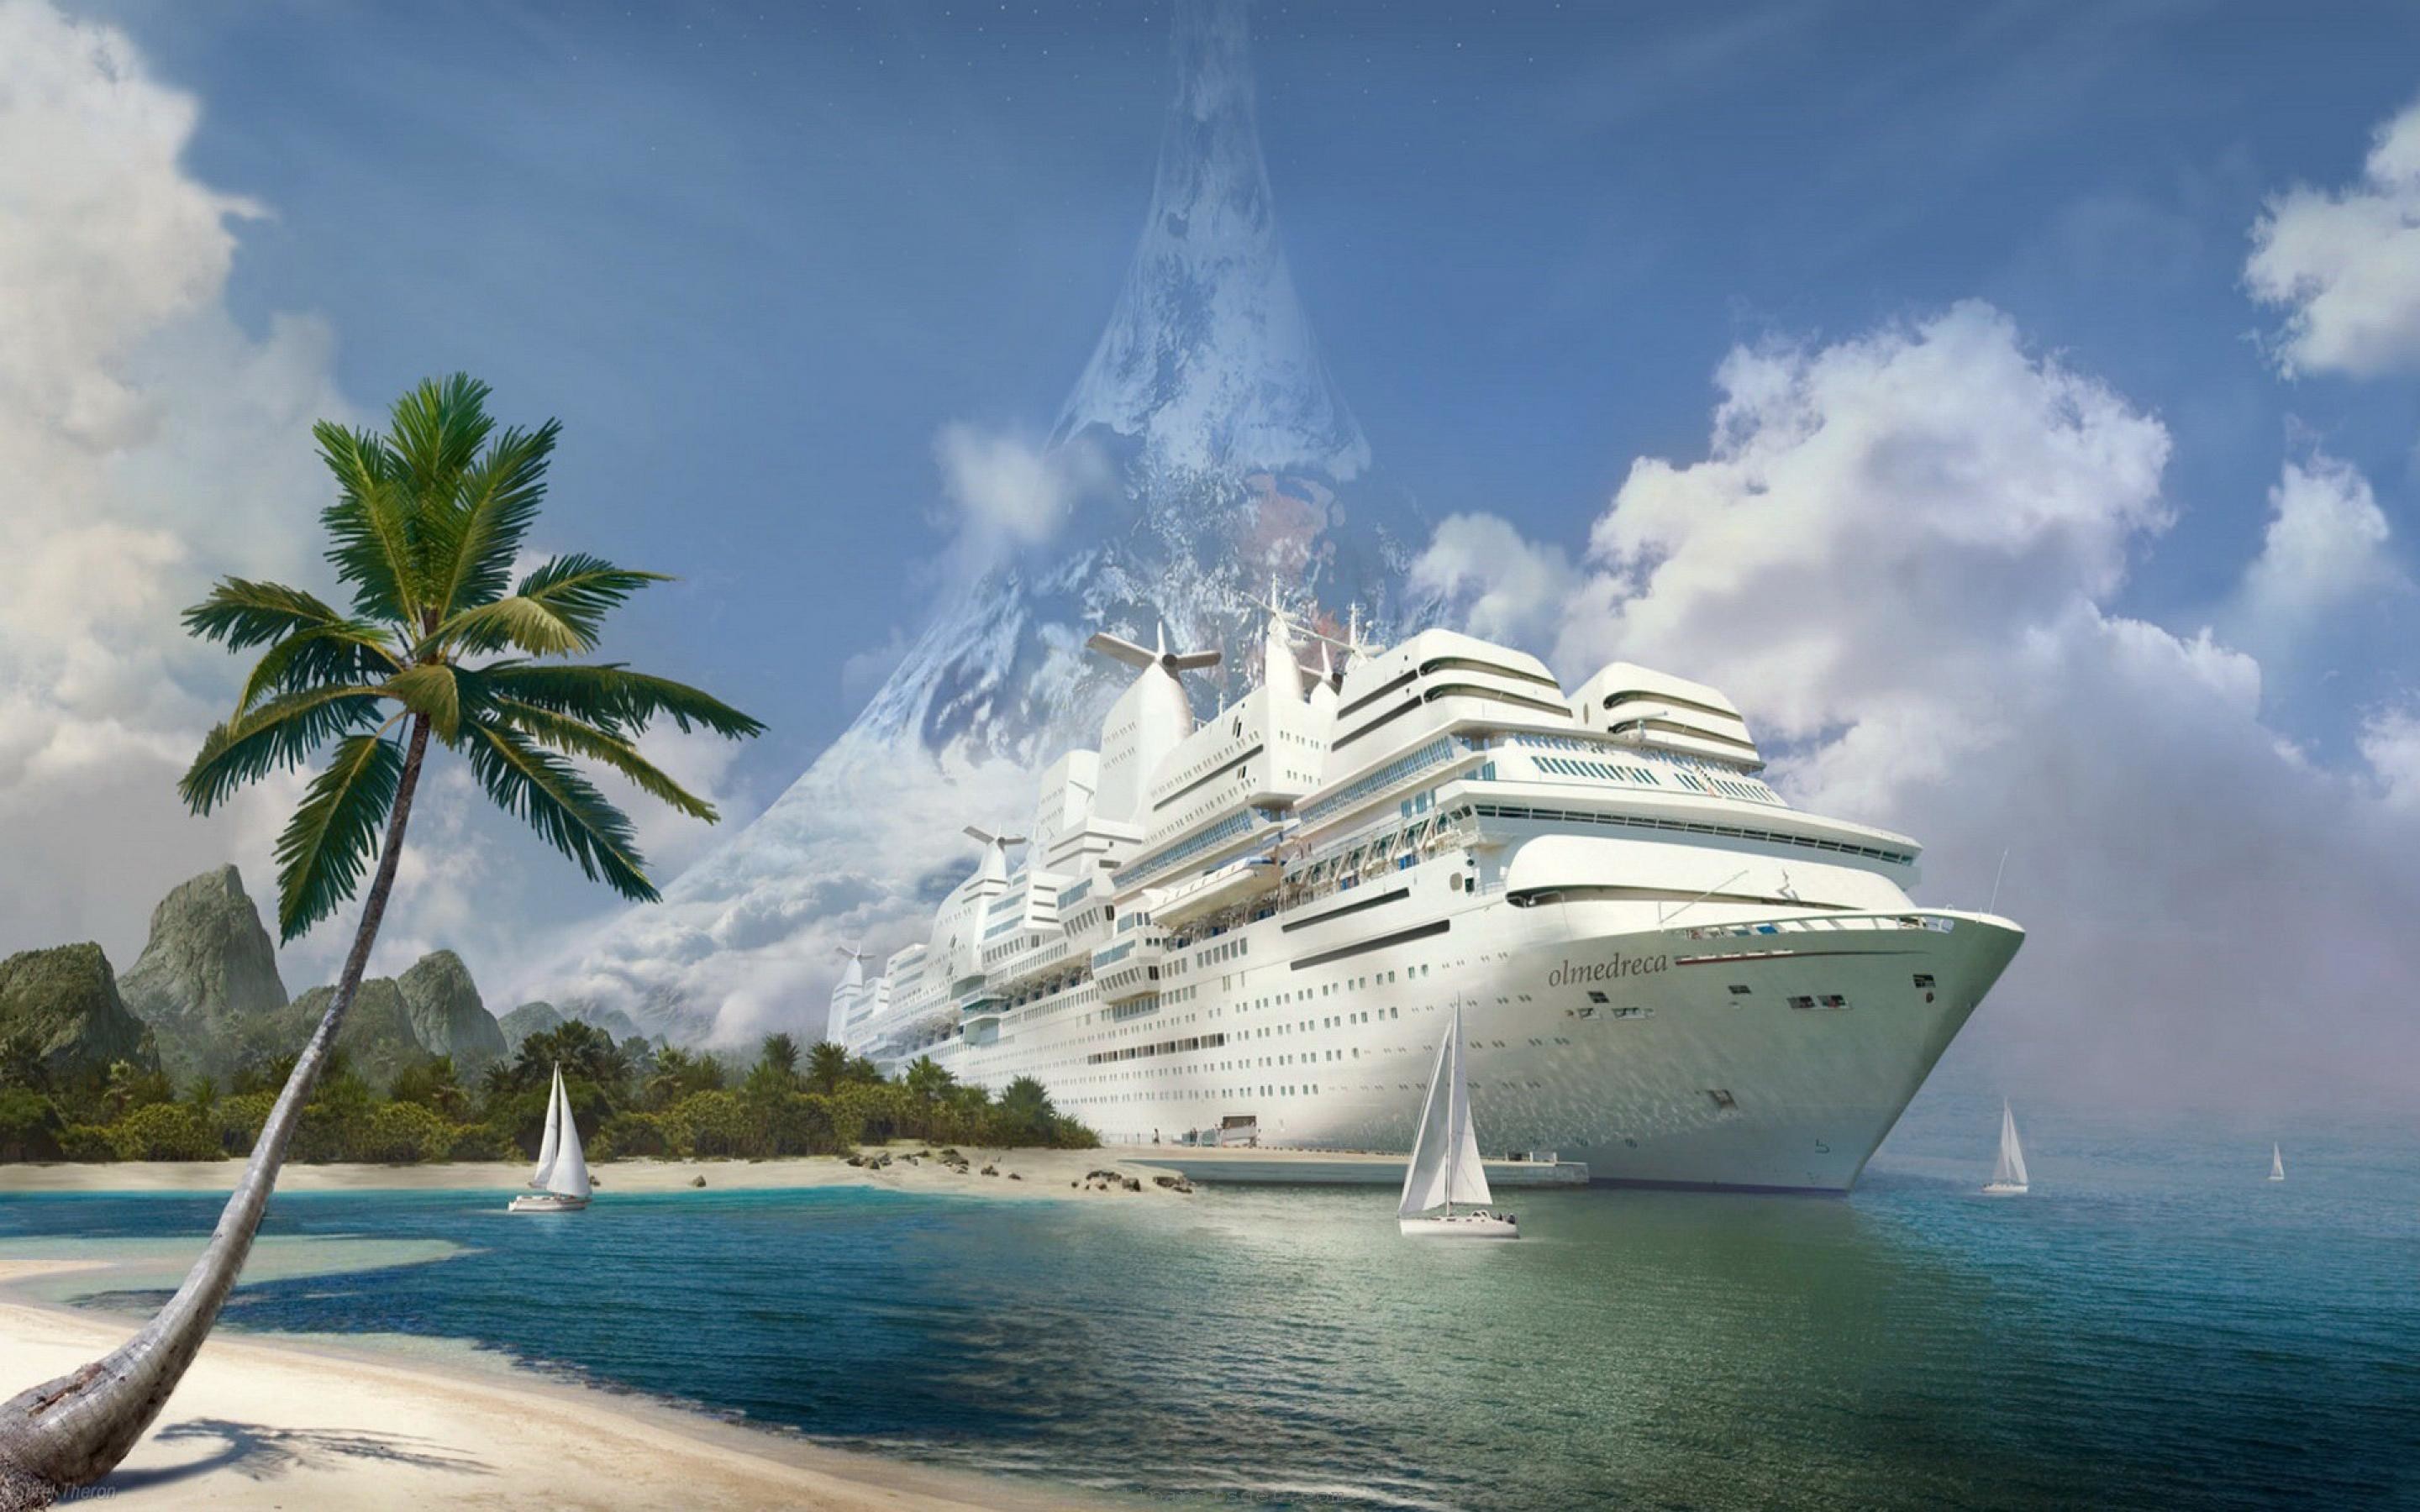 Carnival Cruise Ship Fantasy Wallpaper | ÐÐÐ Ð¡ÐÐÐ¯ Ð¢ÐÐÐÐ¢ÐÐÐ-1 | Pinterest | Carnival  cruise ships, Cruise ships and Cruises